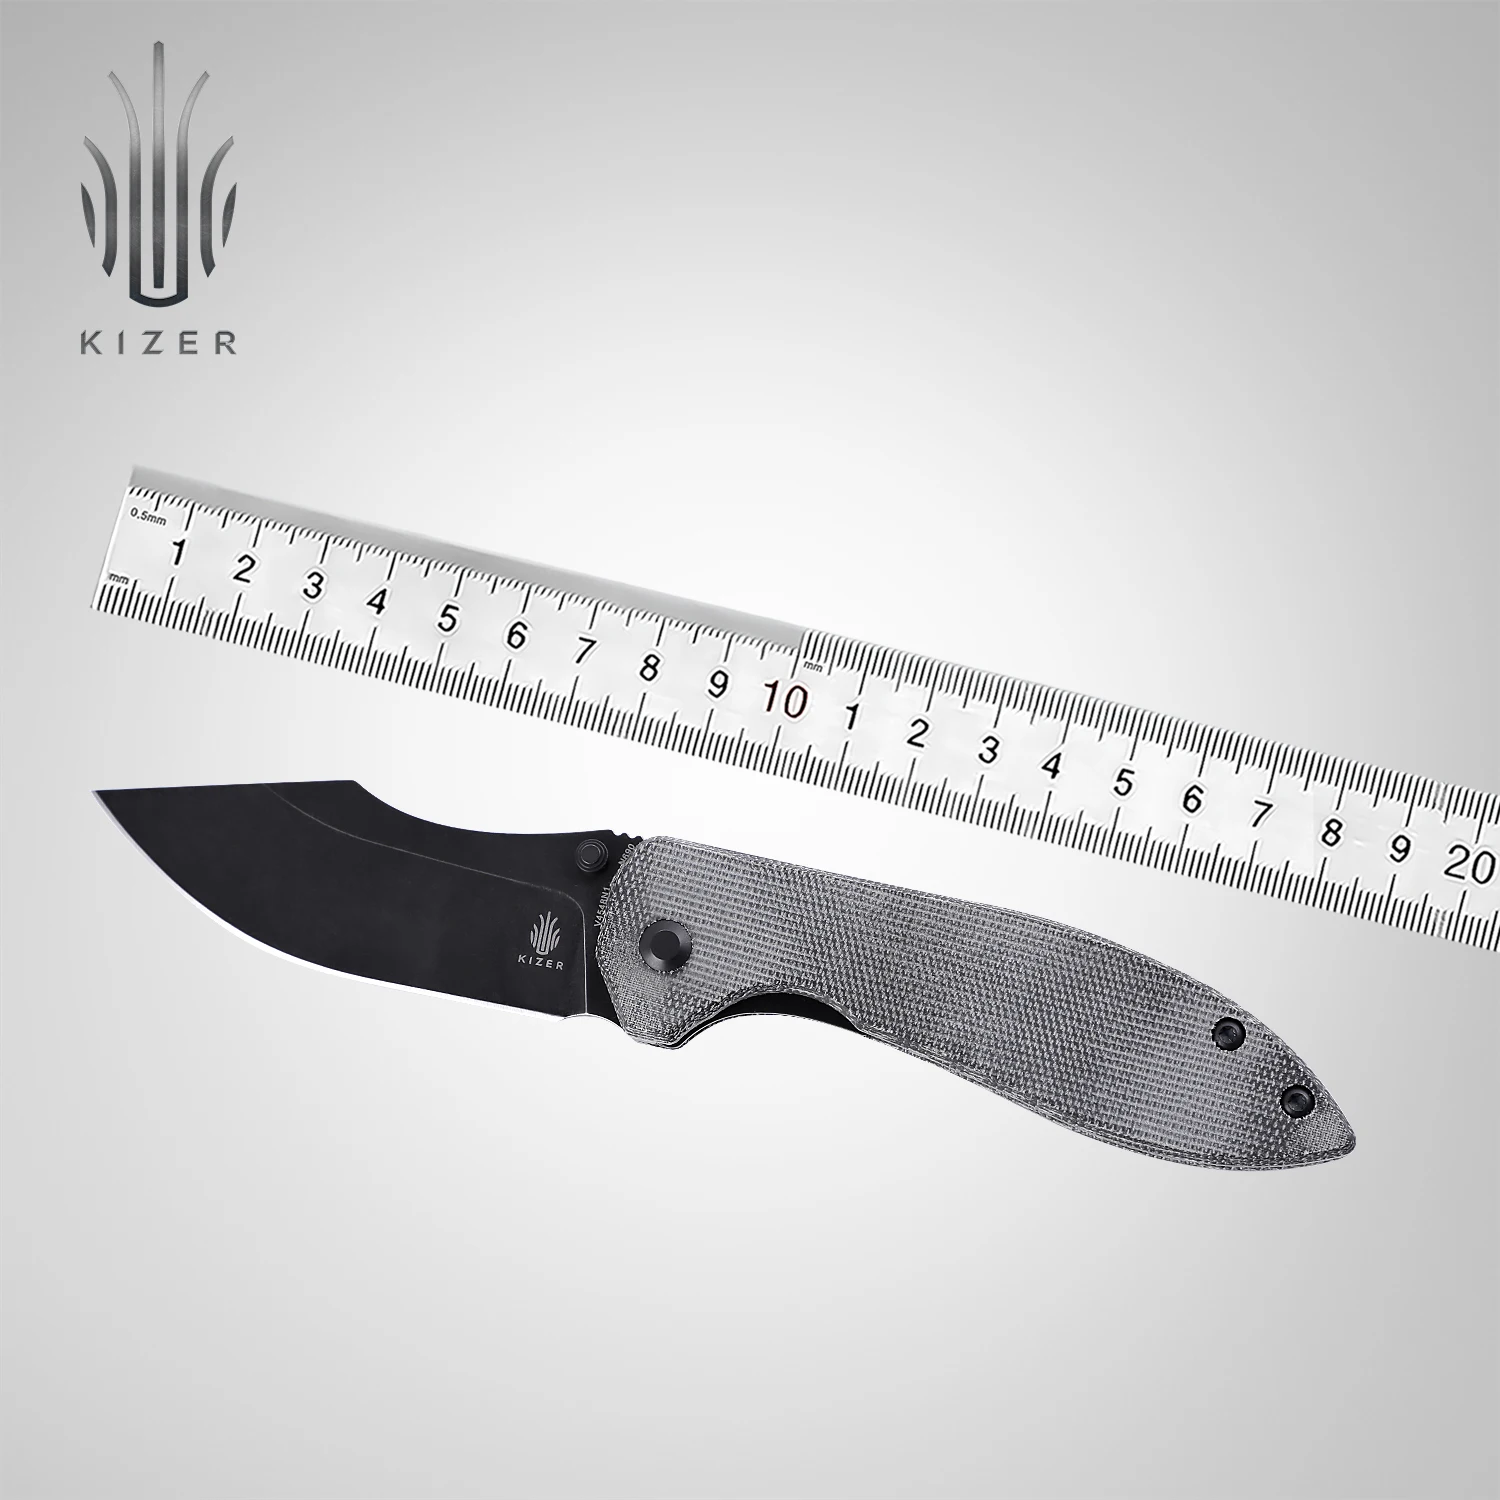 Kizer Pocket Knife V4548N1 2021 New Arrival Black Micarta Handle with Black N690 Steel Blade EDC Knife with Thumb Studs Opening